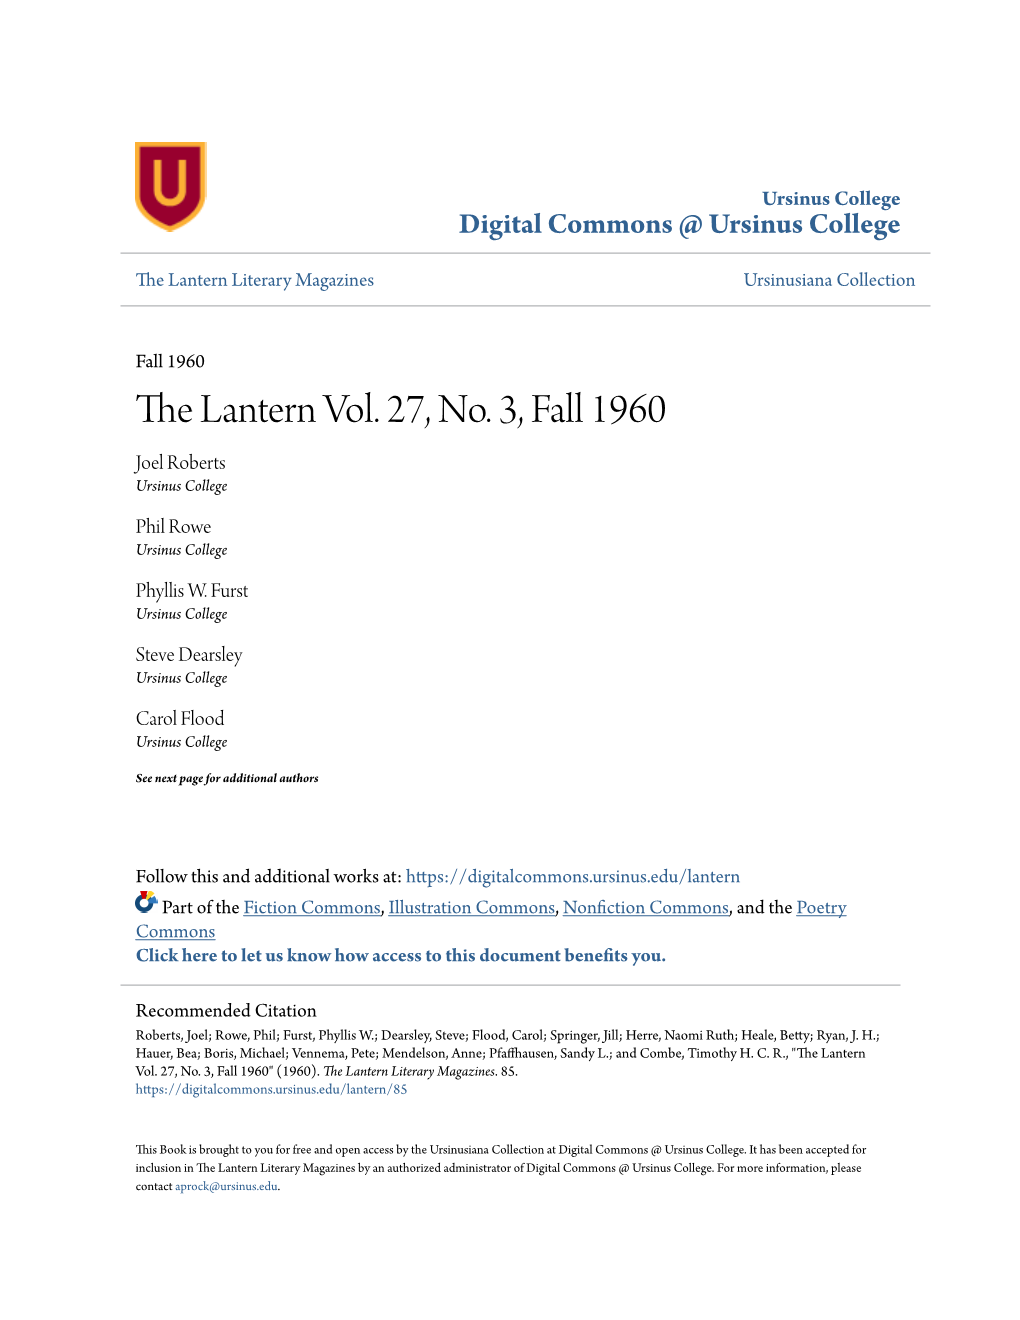 The Lantern Vol. 27, No. 3, Fall 1960 Joel Roberts Ursinus College